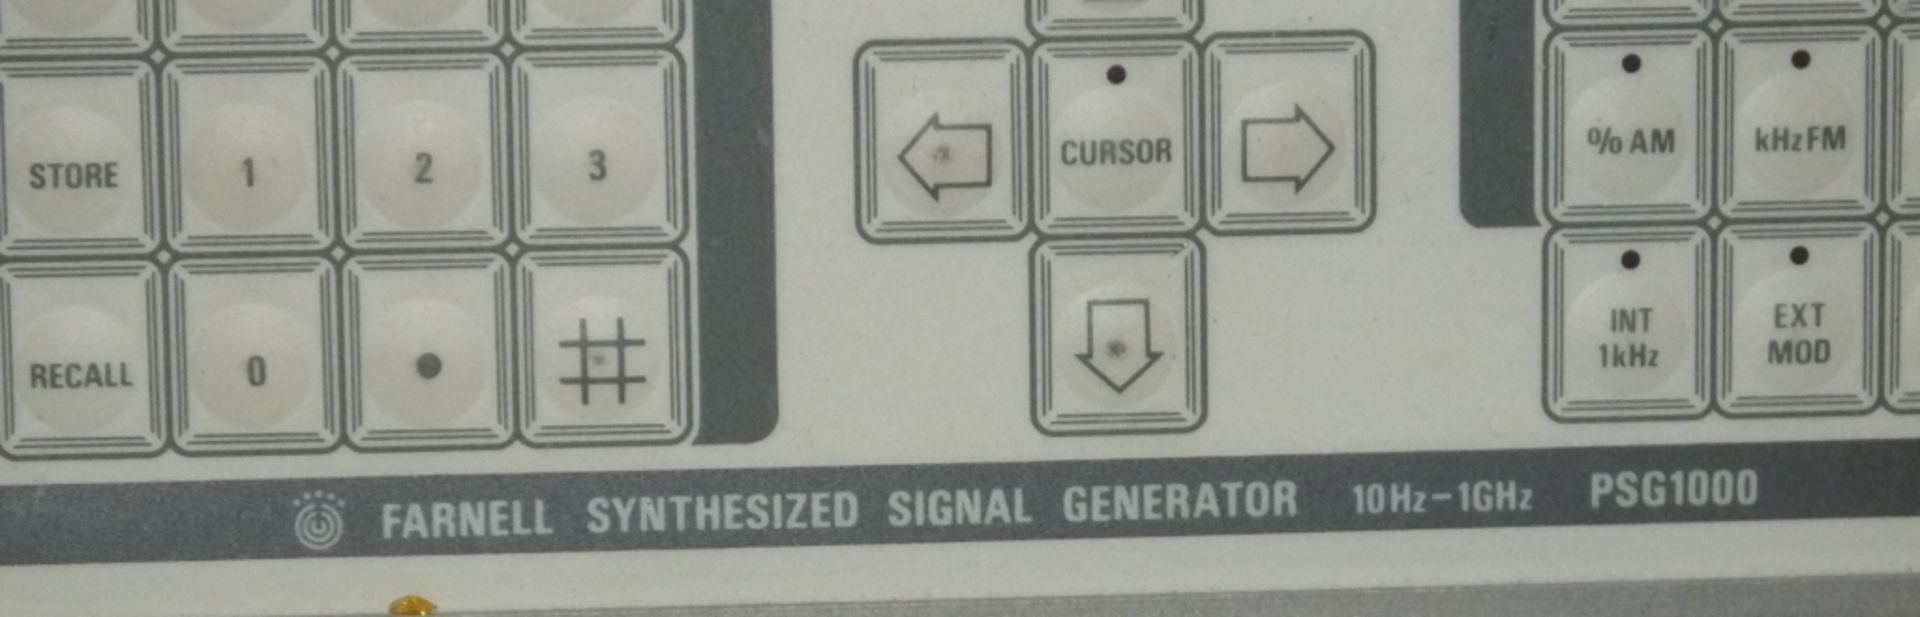 Farnell Signal Generator - 10Hz - 1Ghz - PSG1000 - Image 3 of 4